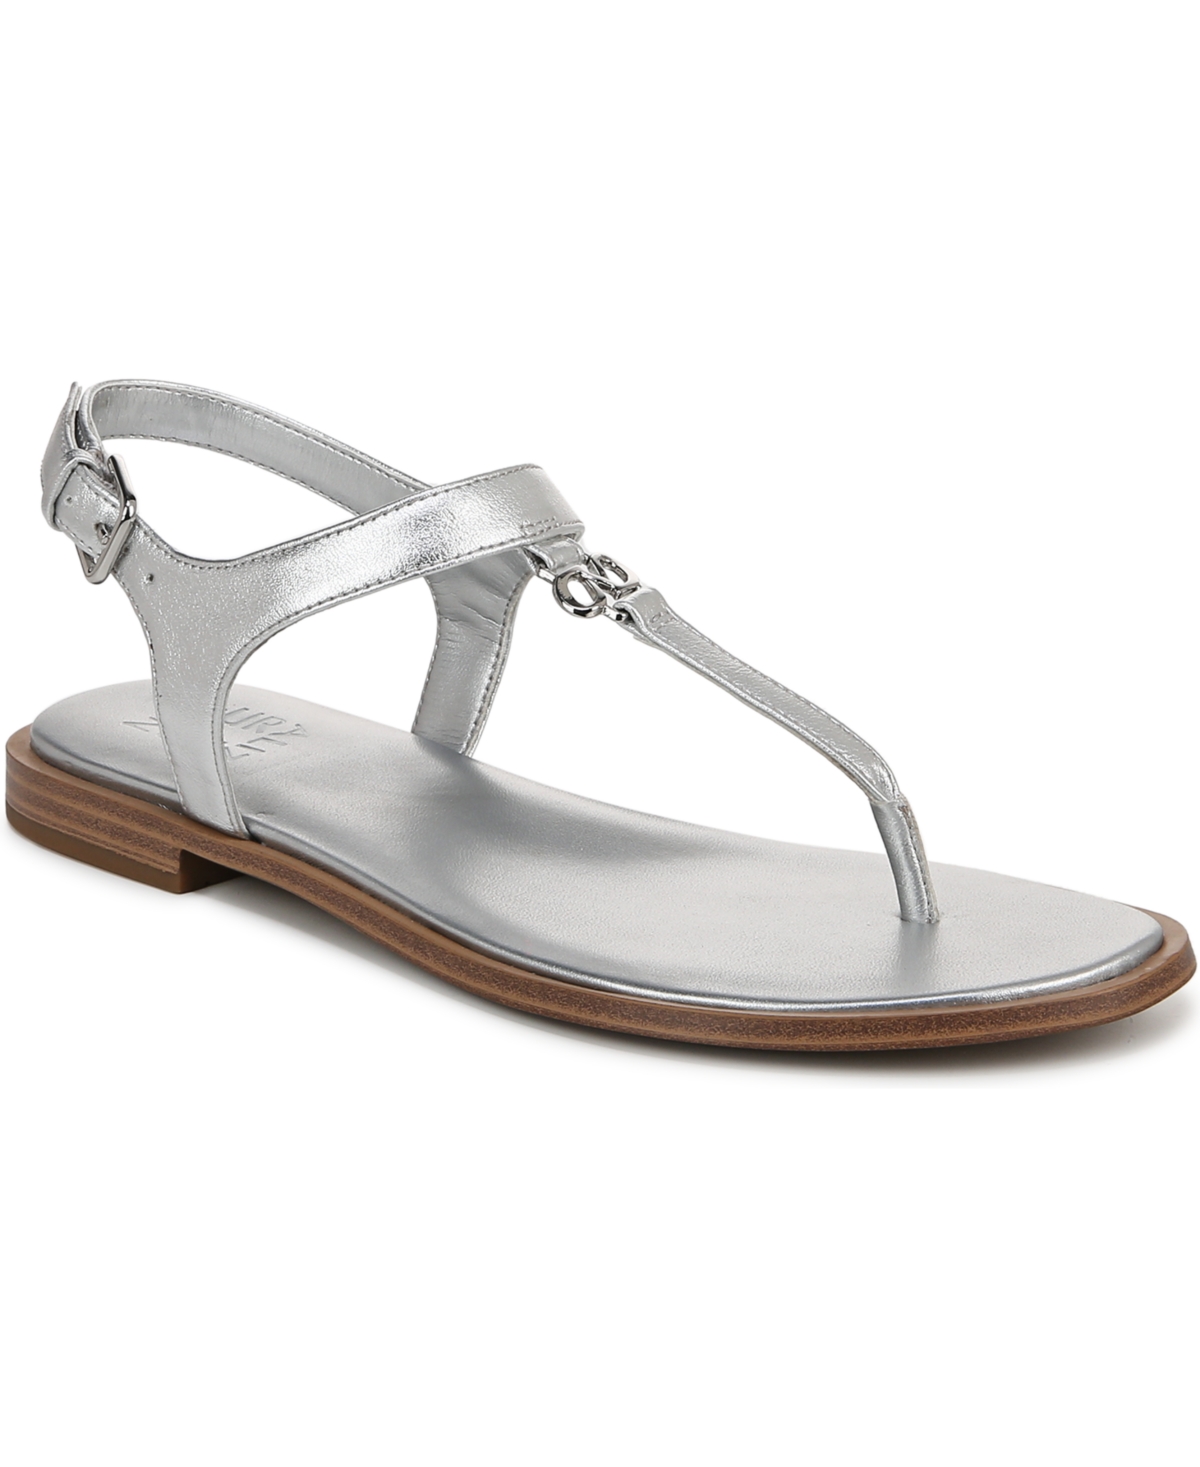 Lizzi T-Strap Flat Sandals - Silver Faux Leather